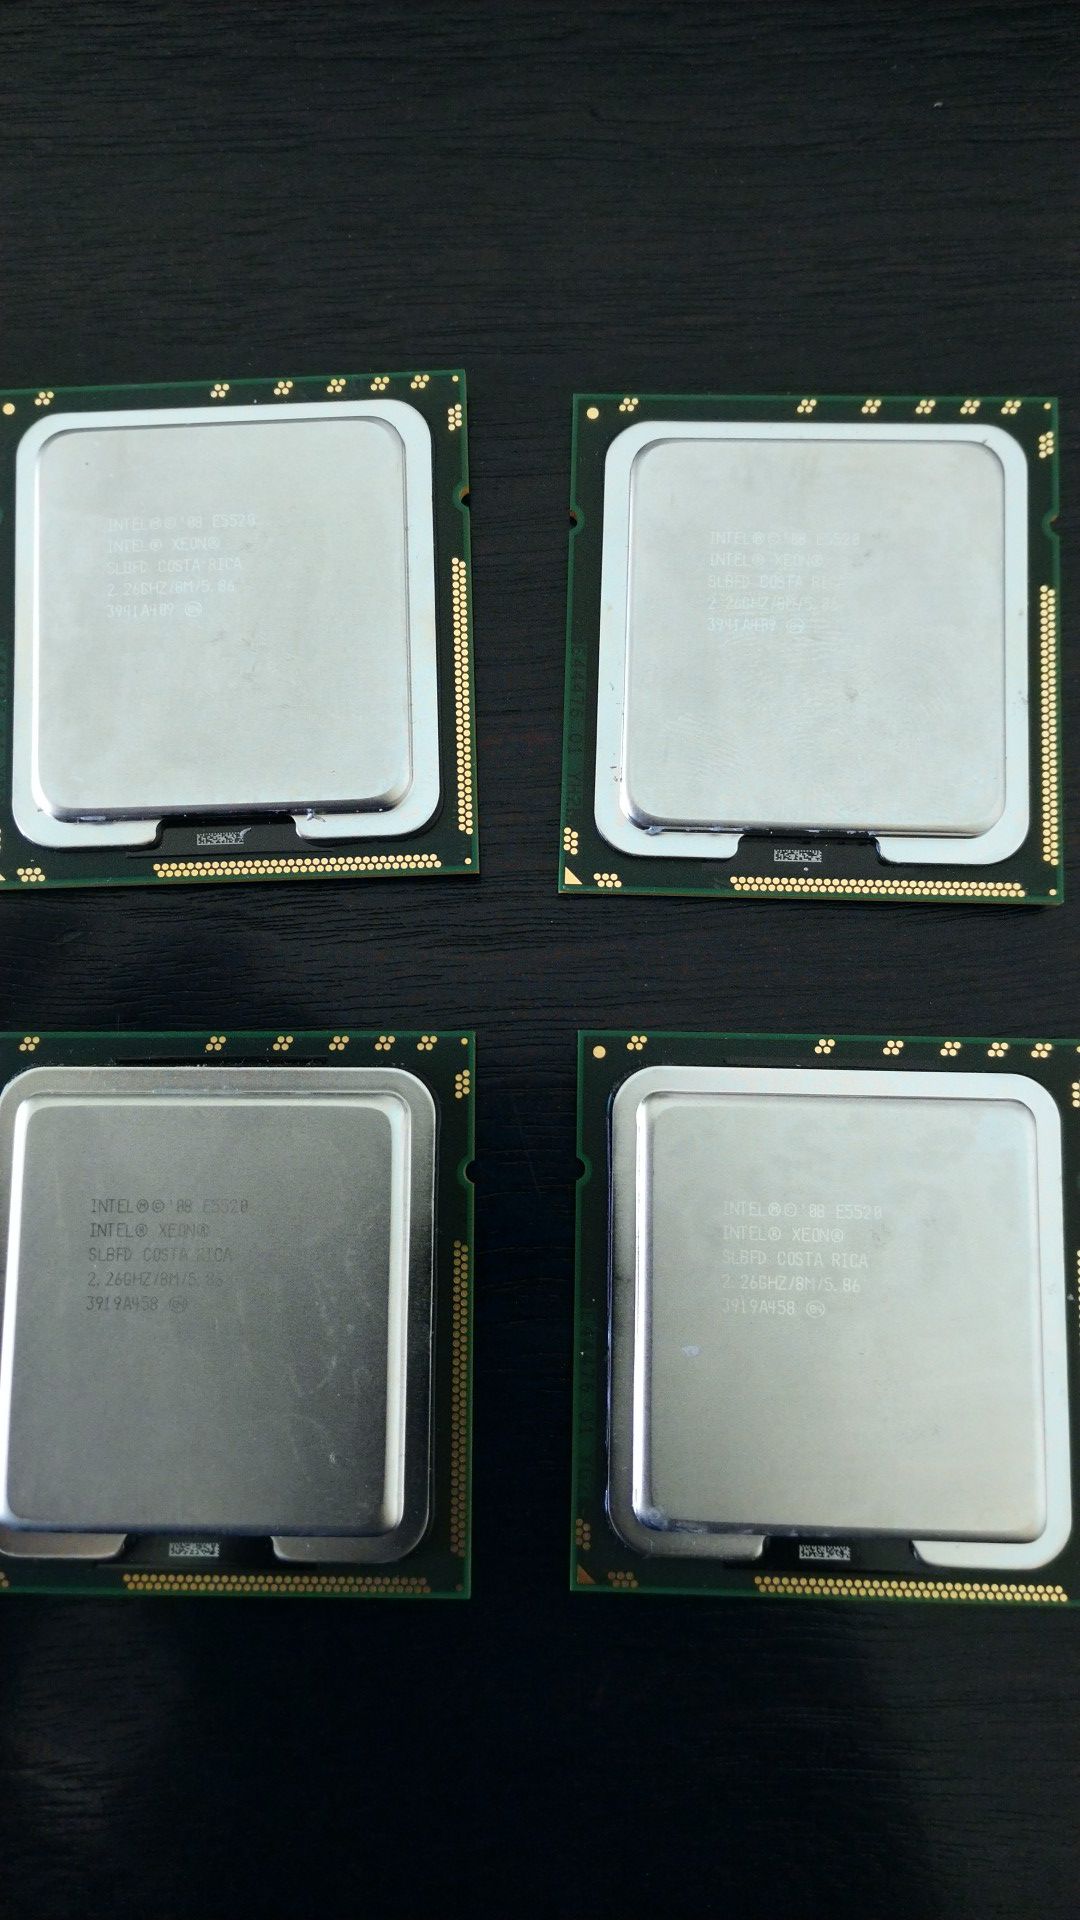 Intel Xeon E5520 CPUs - Socket 1366 - FREE